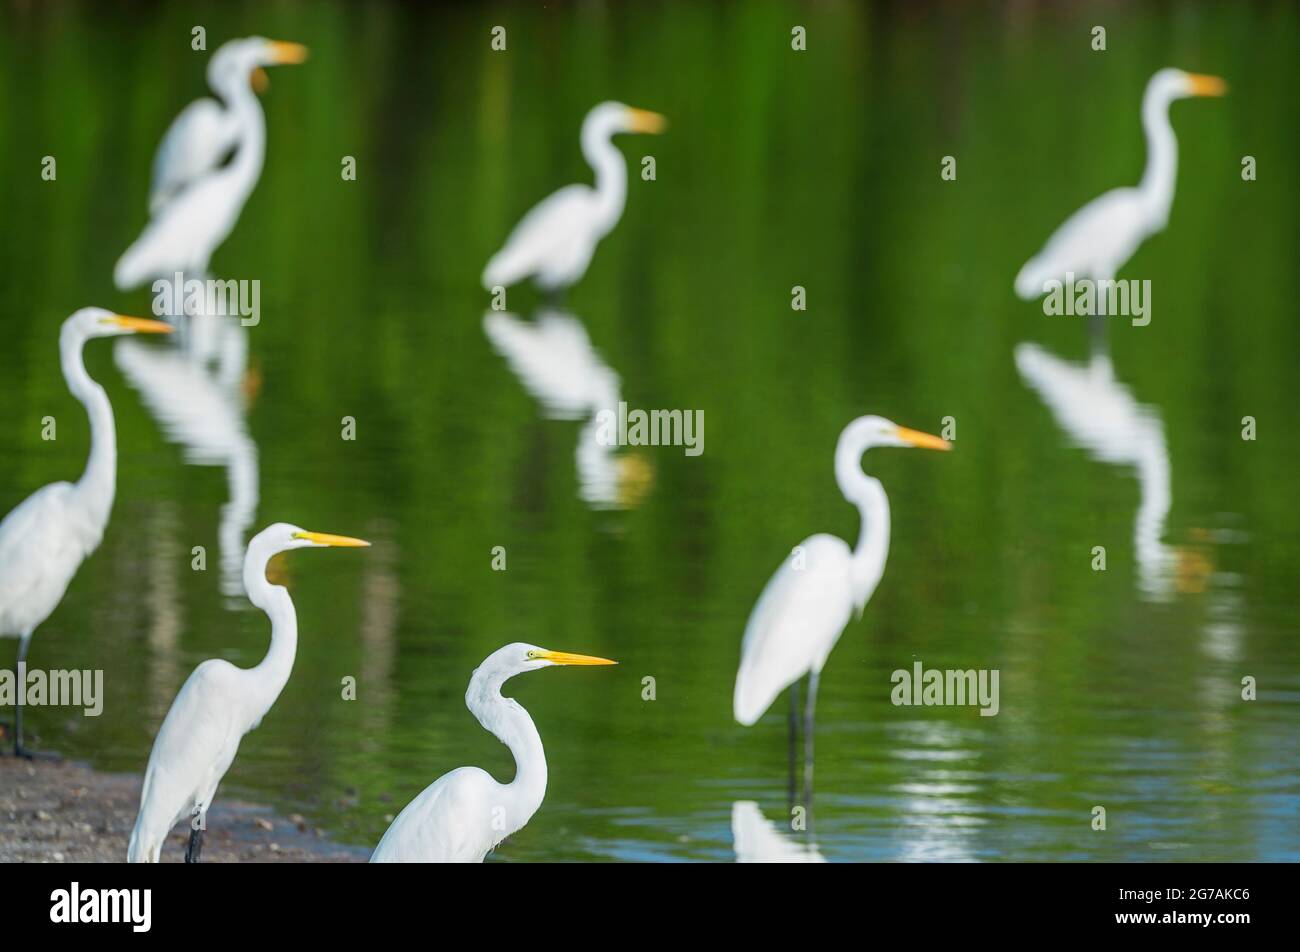 Great white egrets (Ardea alba) looking for food in a pond, Sanibel Island, J.N. Ding Darling National Wildlife Refuge, Florida, USA Stock Photo